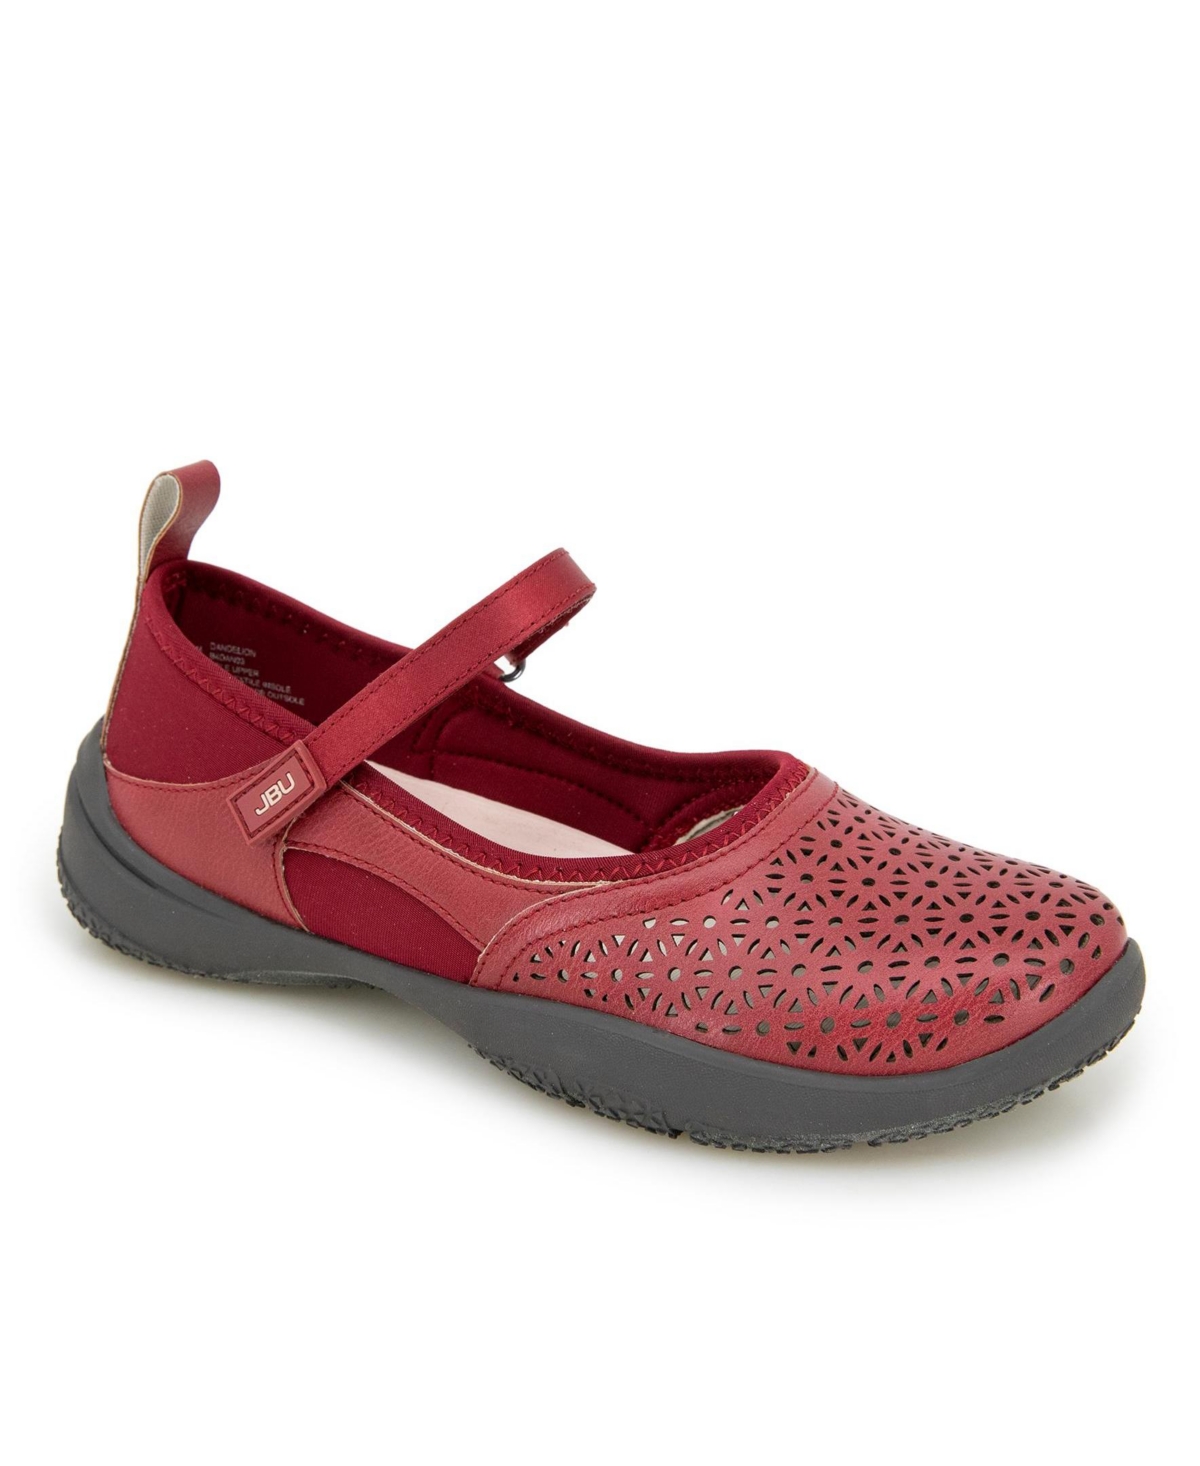 Women's Dandelion Hook and Loop Closure Sporty Flat Shoe - Red